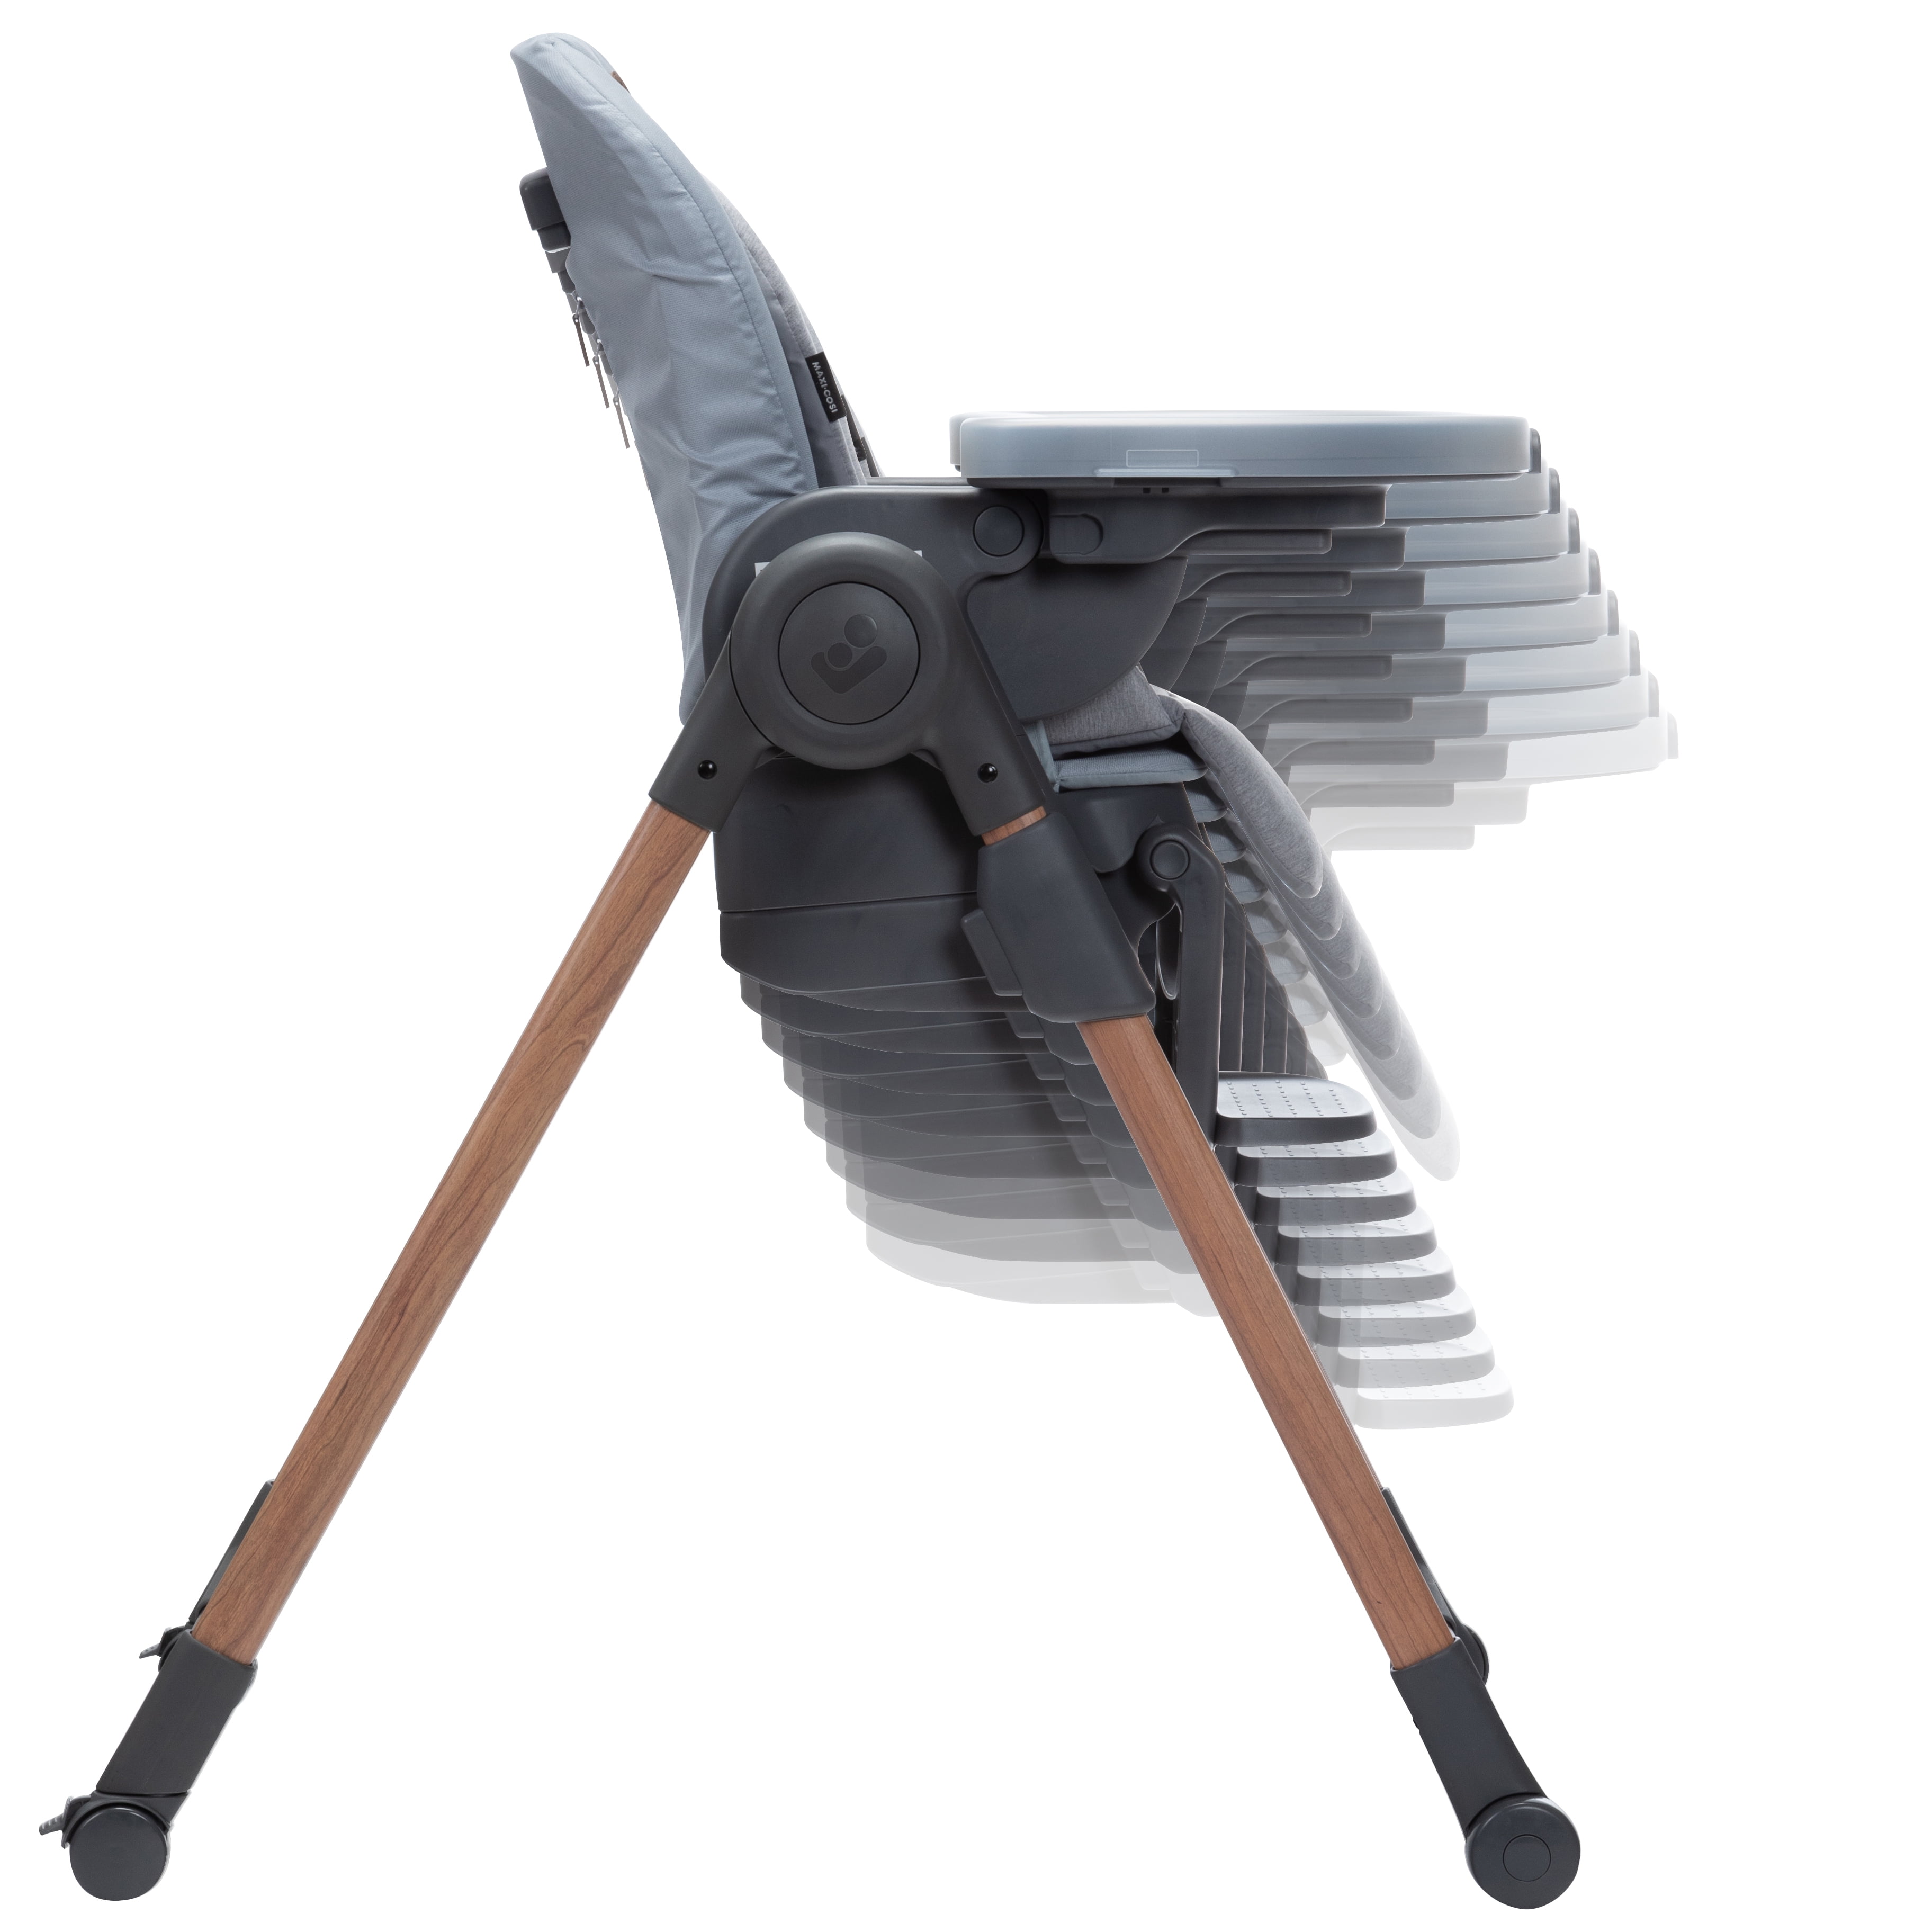 Maxi-Cosi Minla Baby Highchair - Essential Graphite (2713750300